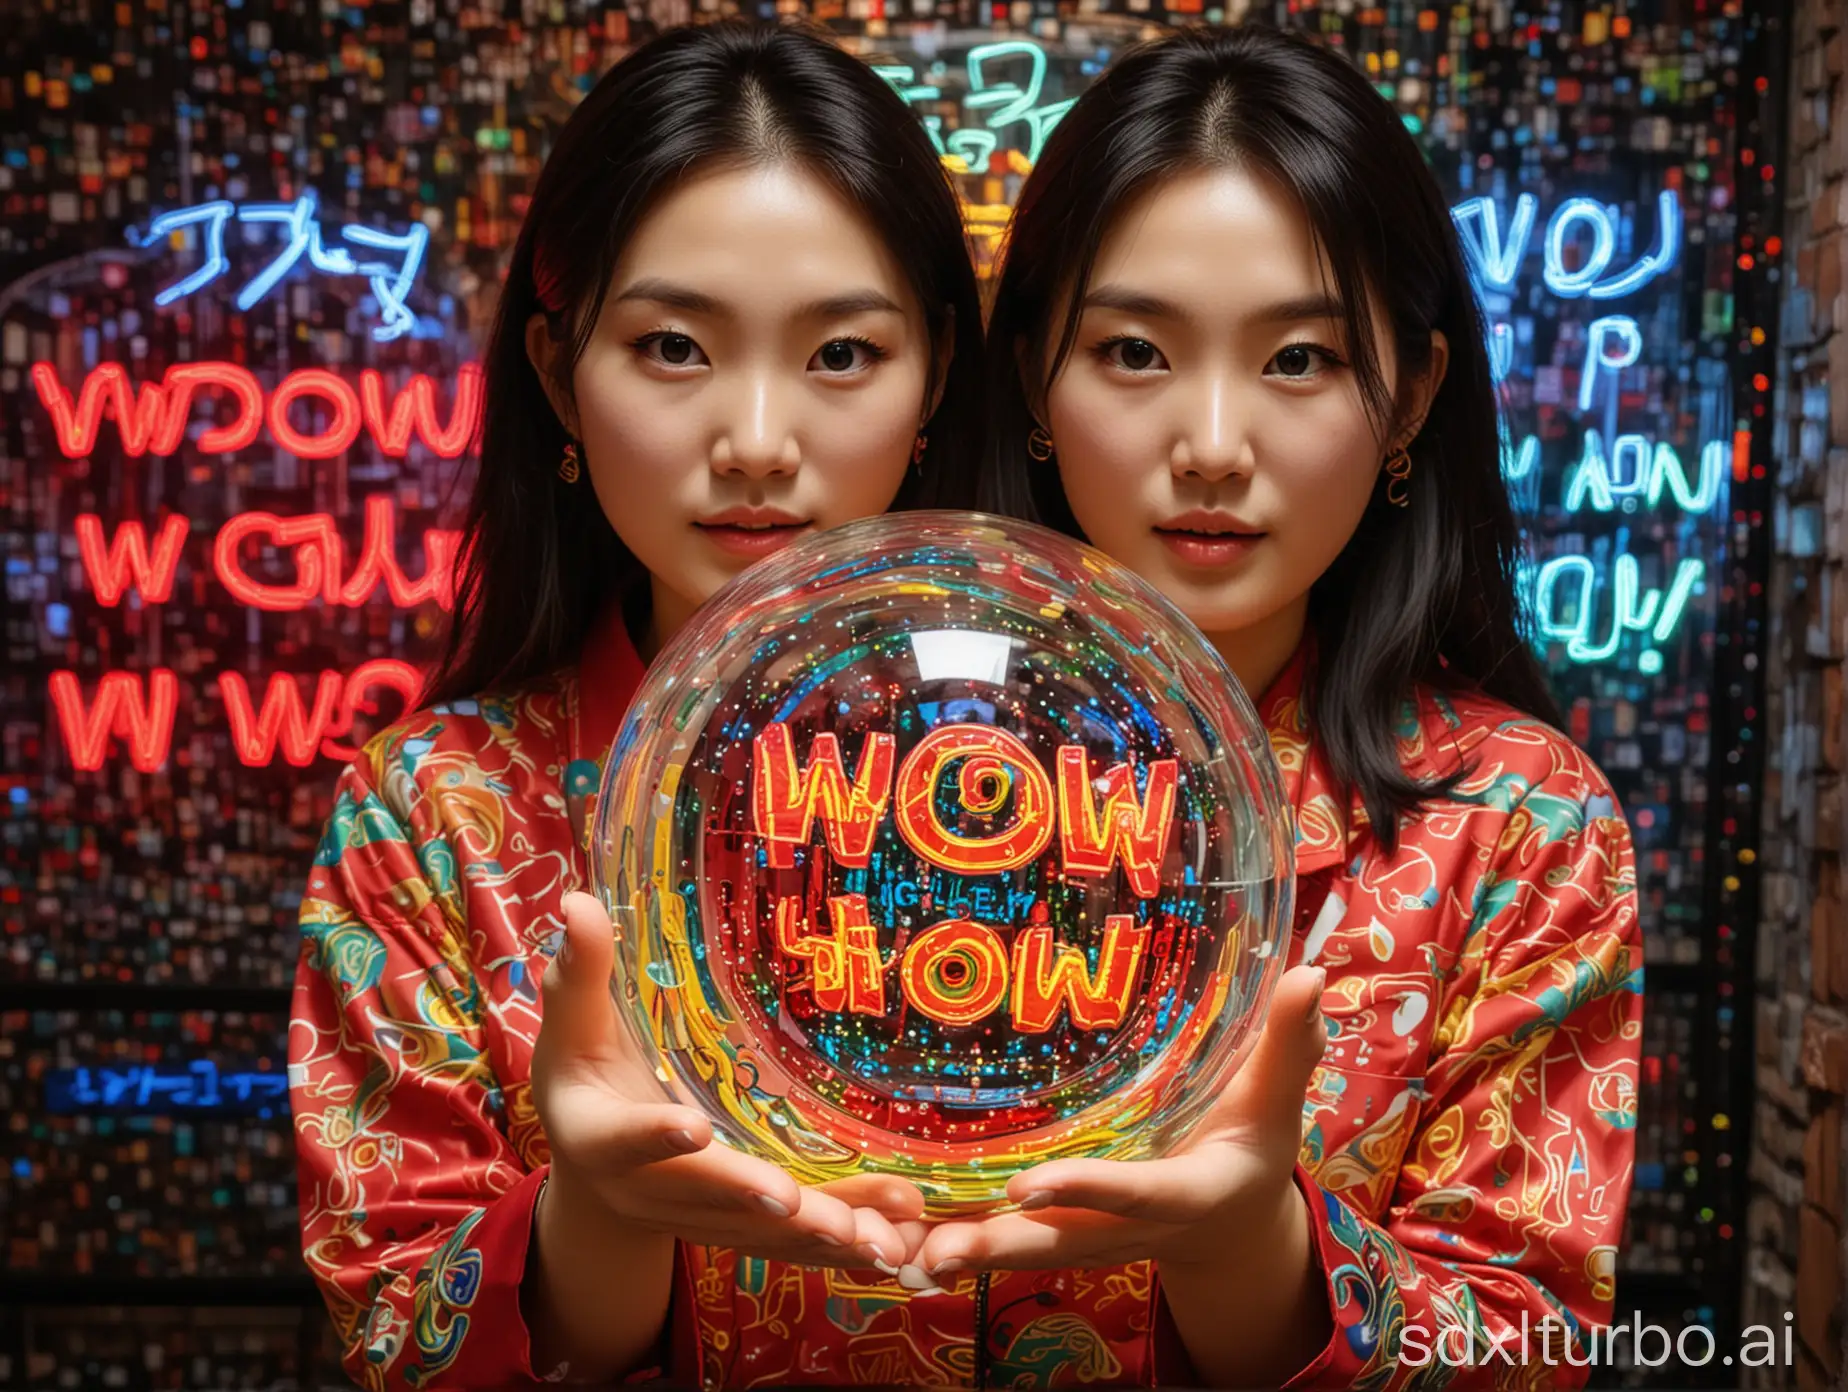 seorang perempuan korea sedang memegang bola kaca kristal bening, di dalam bola kaca ada tulisan neon 'waw waw'. background pola swirl warna merah,kuning,hijau dan biru.